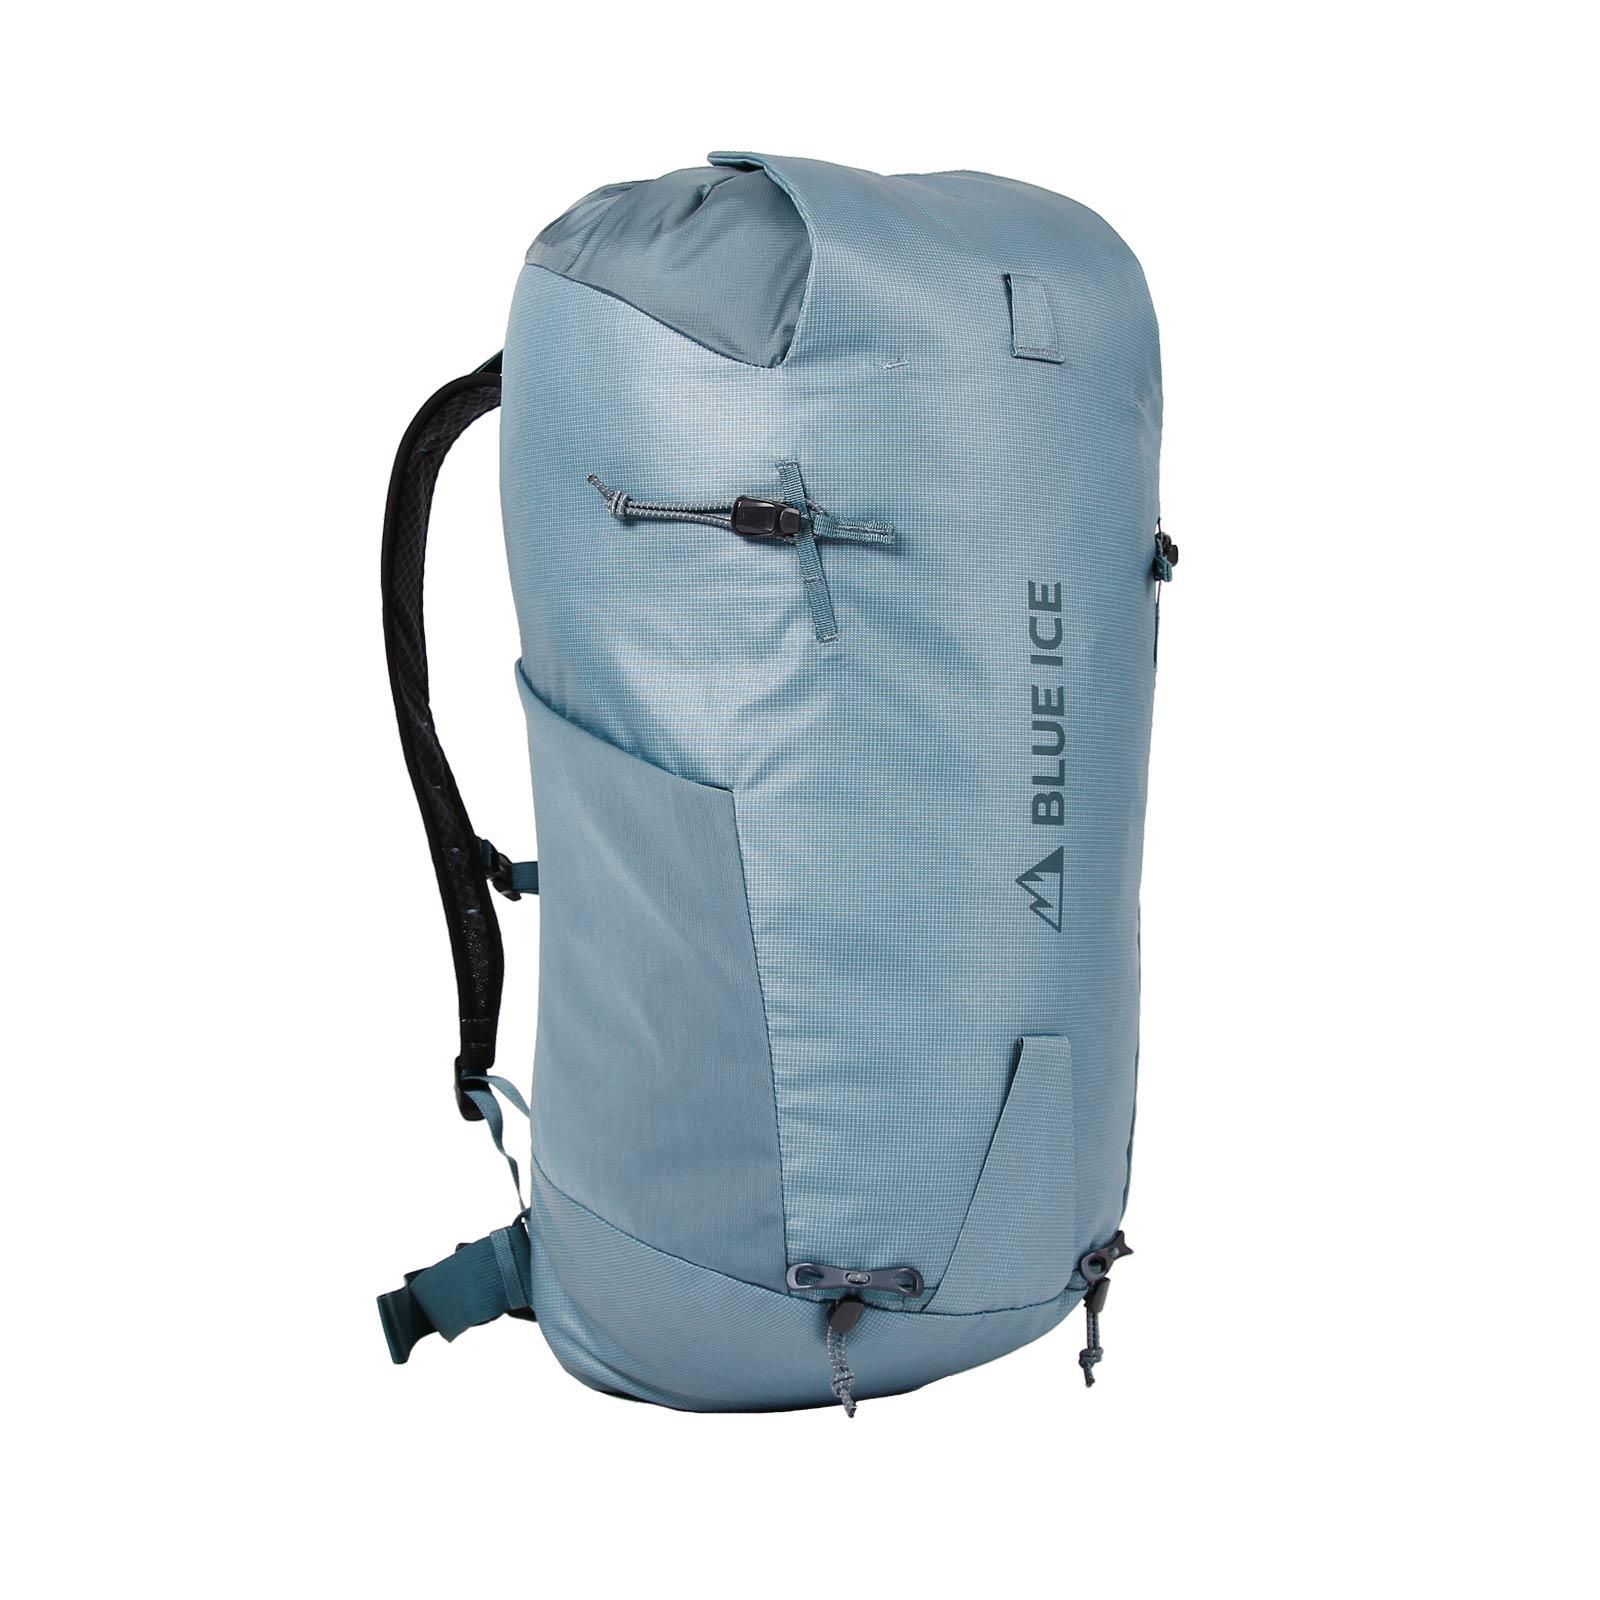 FISH AK - Hypalon Dry Backpack 26L - Stone Blue